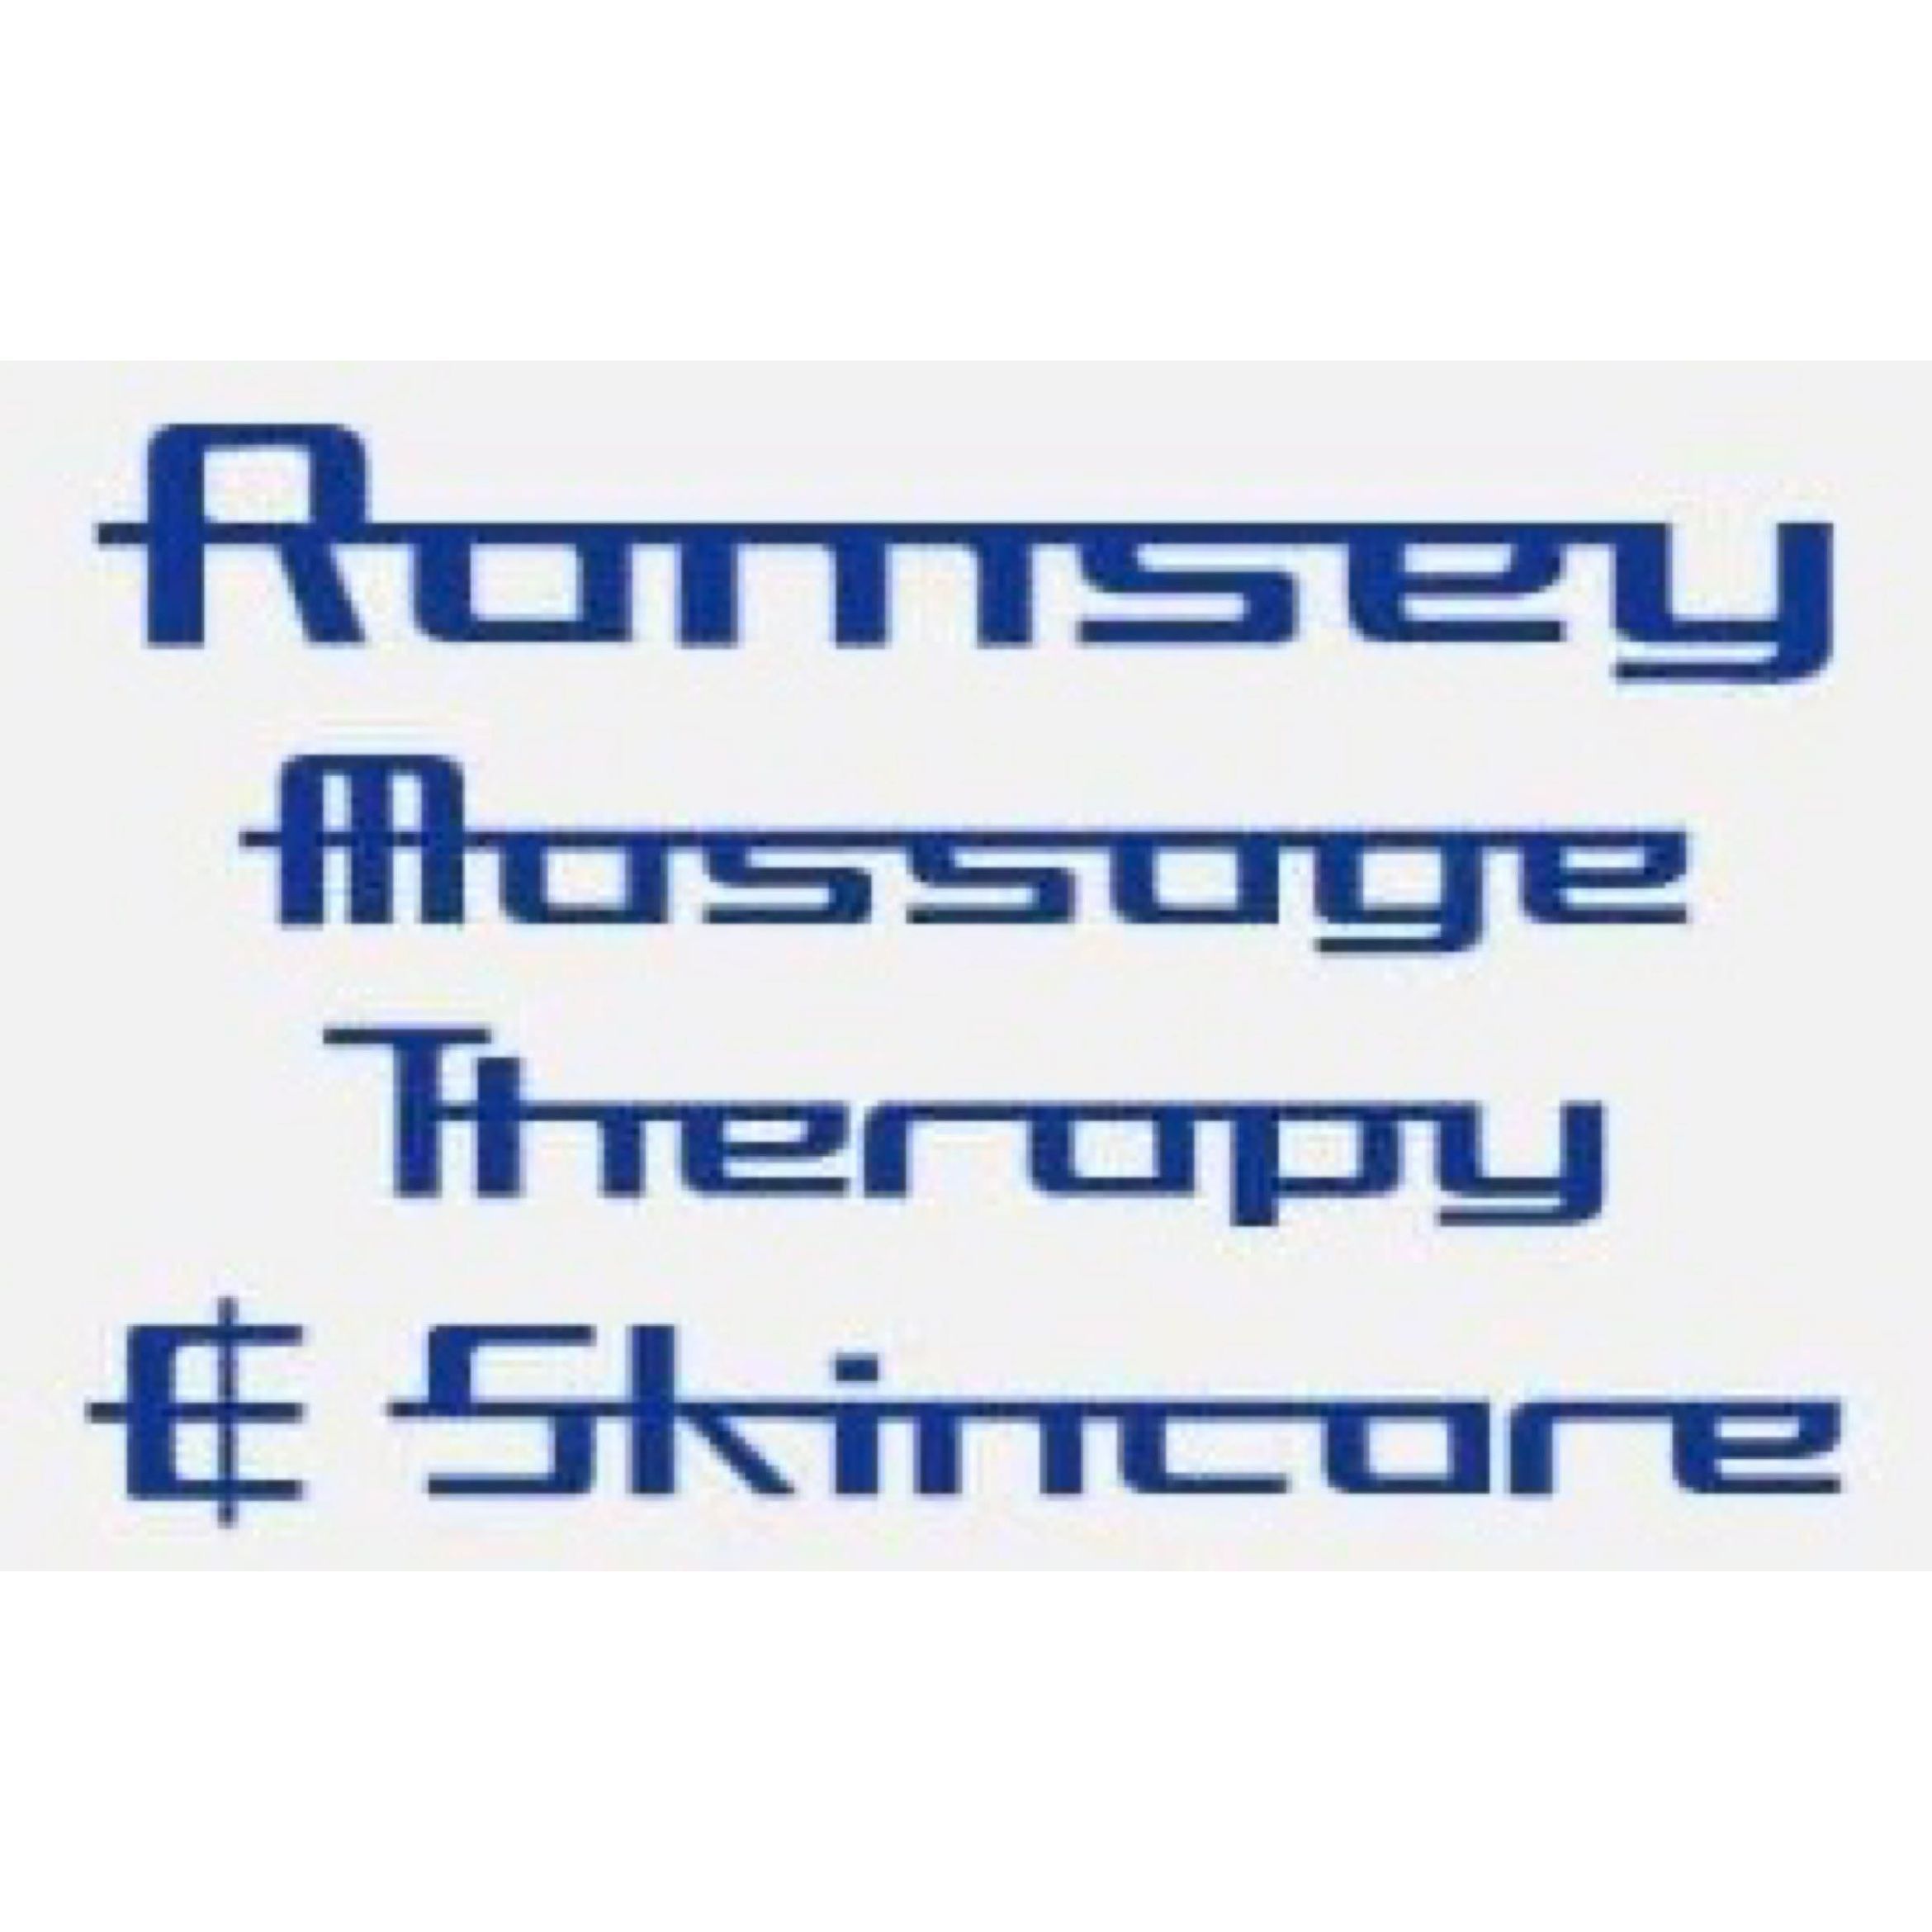 Ramsey Massage Therapy & Skin Care LLC, 660 Northeast Ocean Boulevard #14, Stuart, 34996